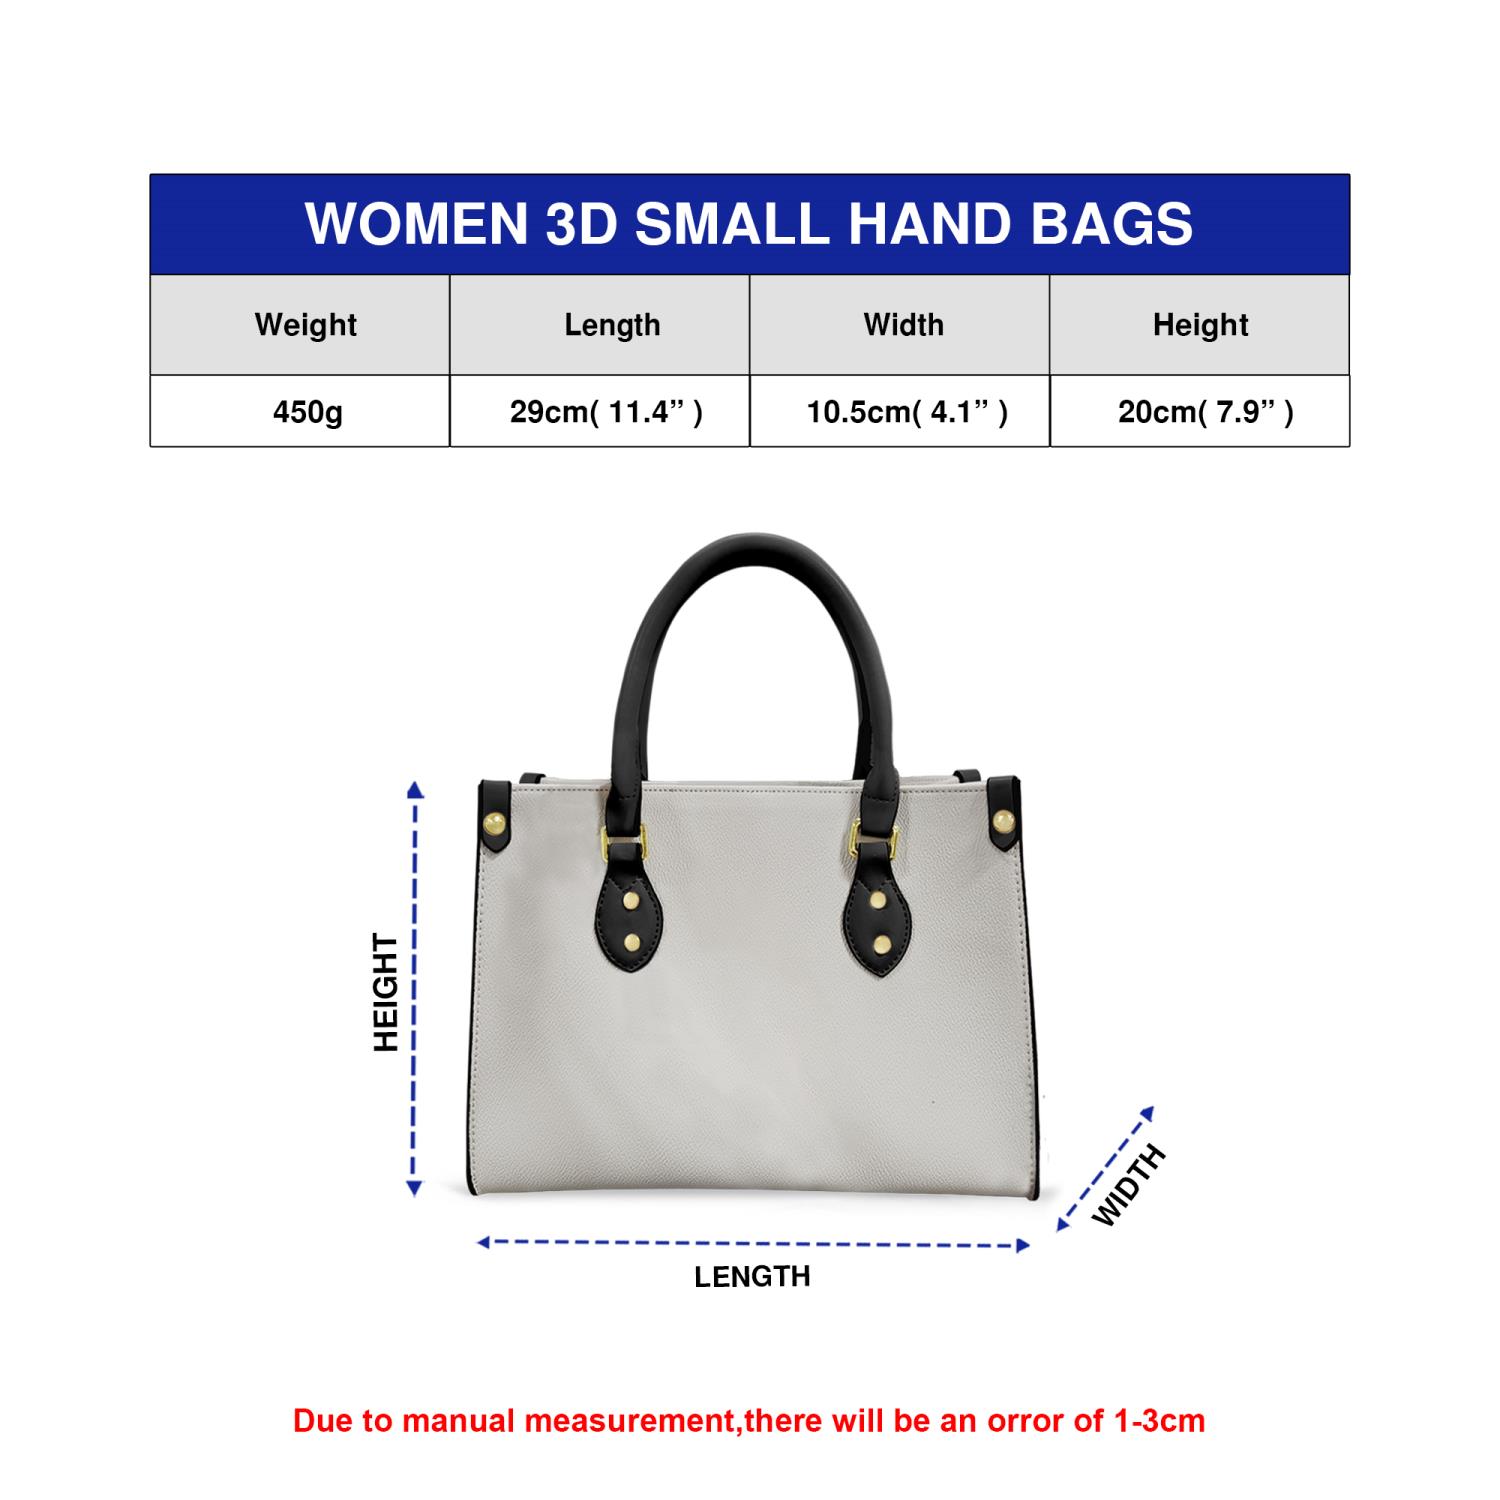 Small Handbags Size Guide